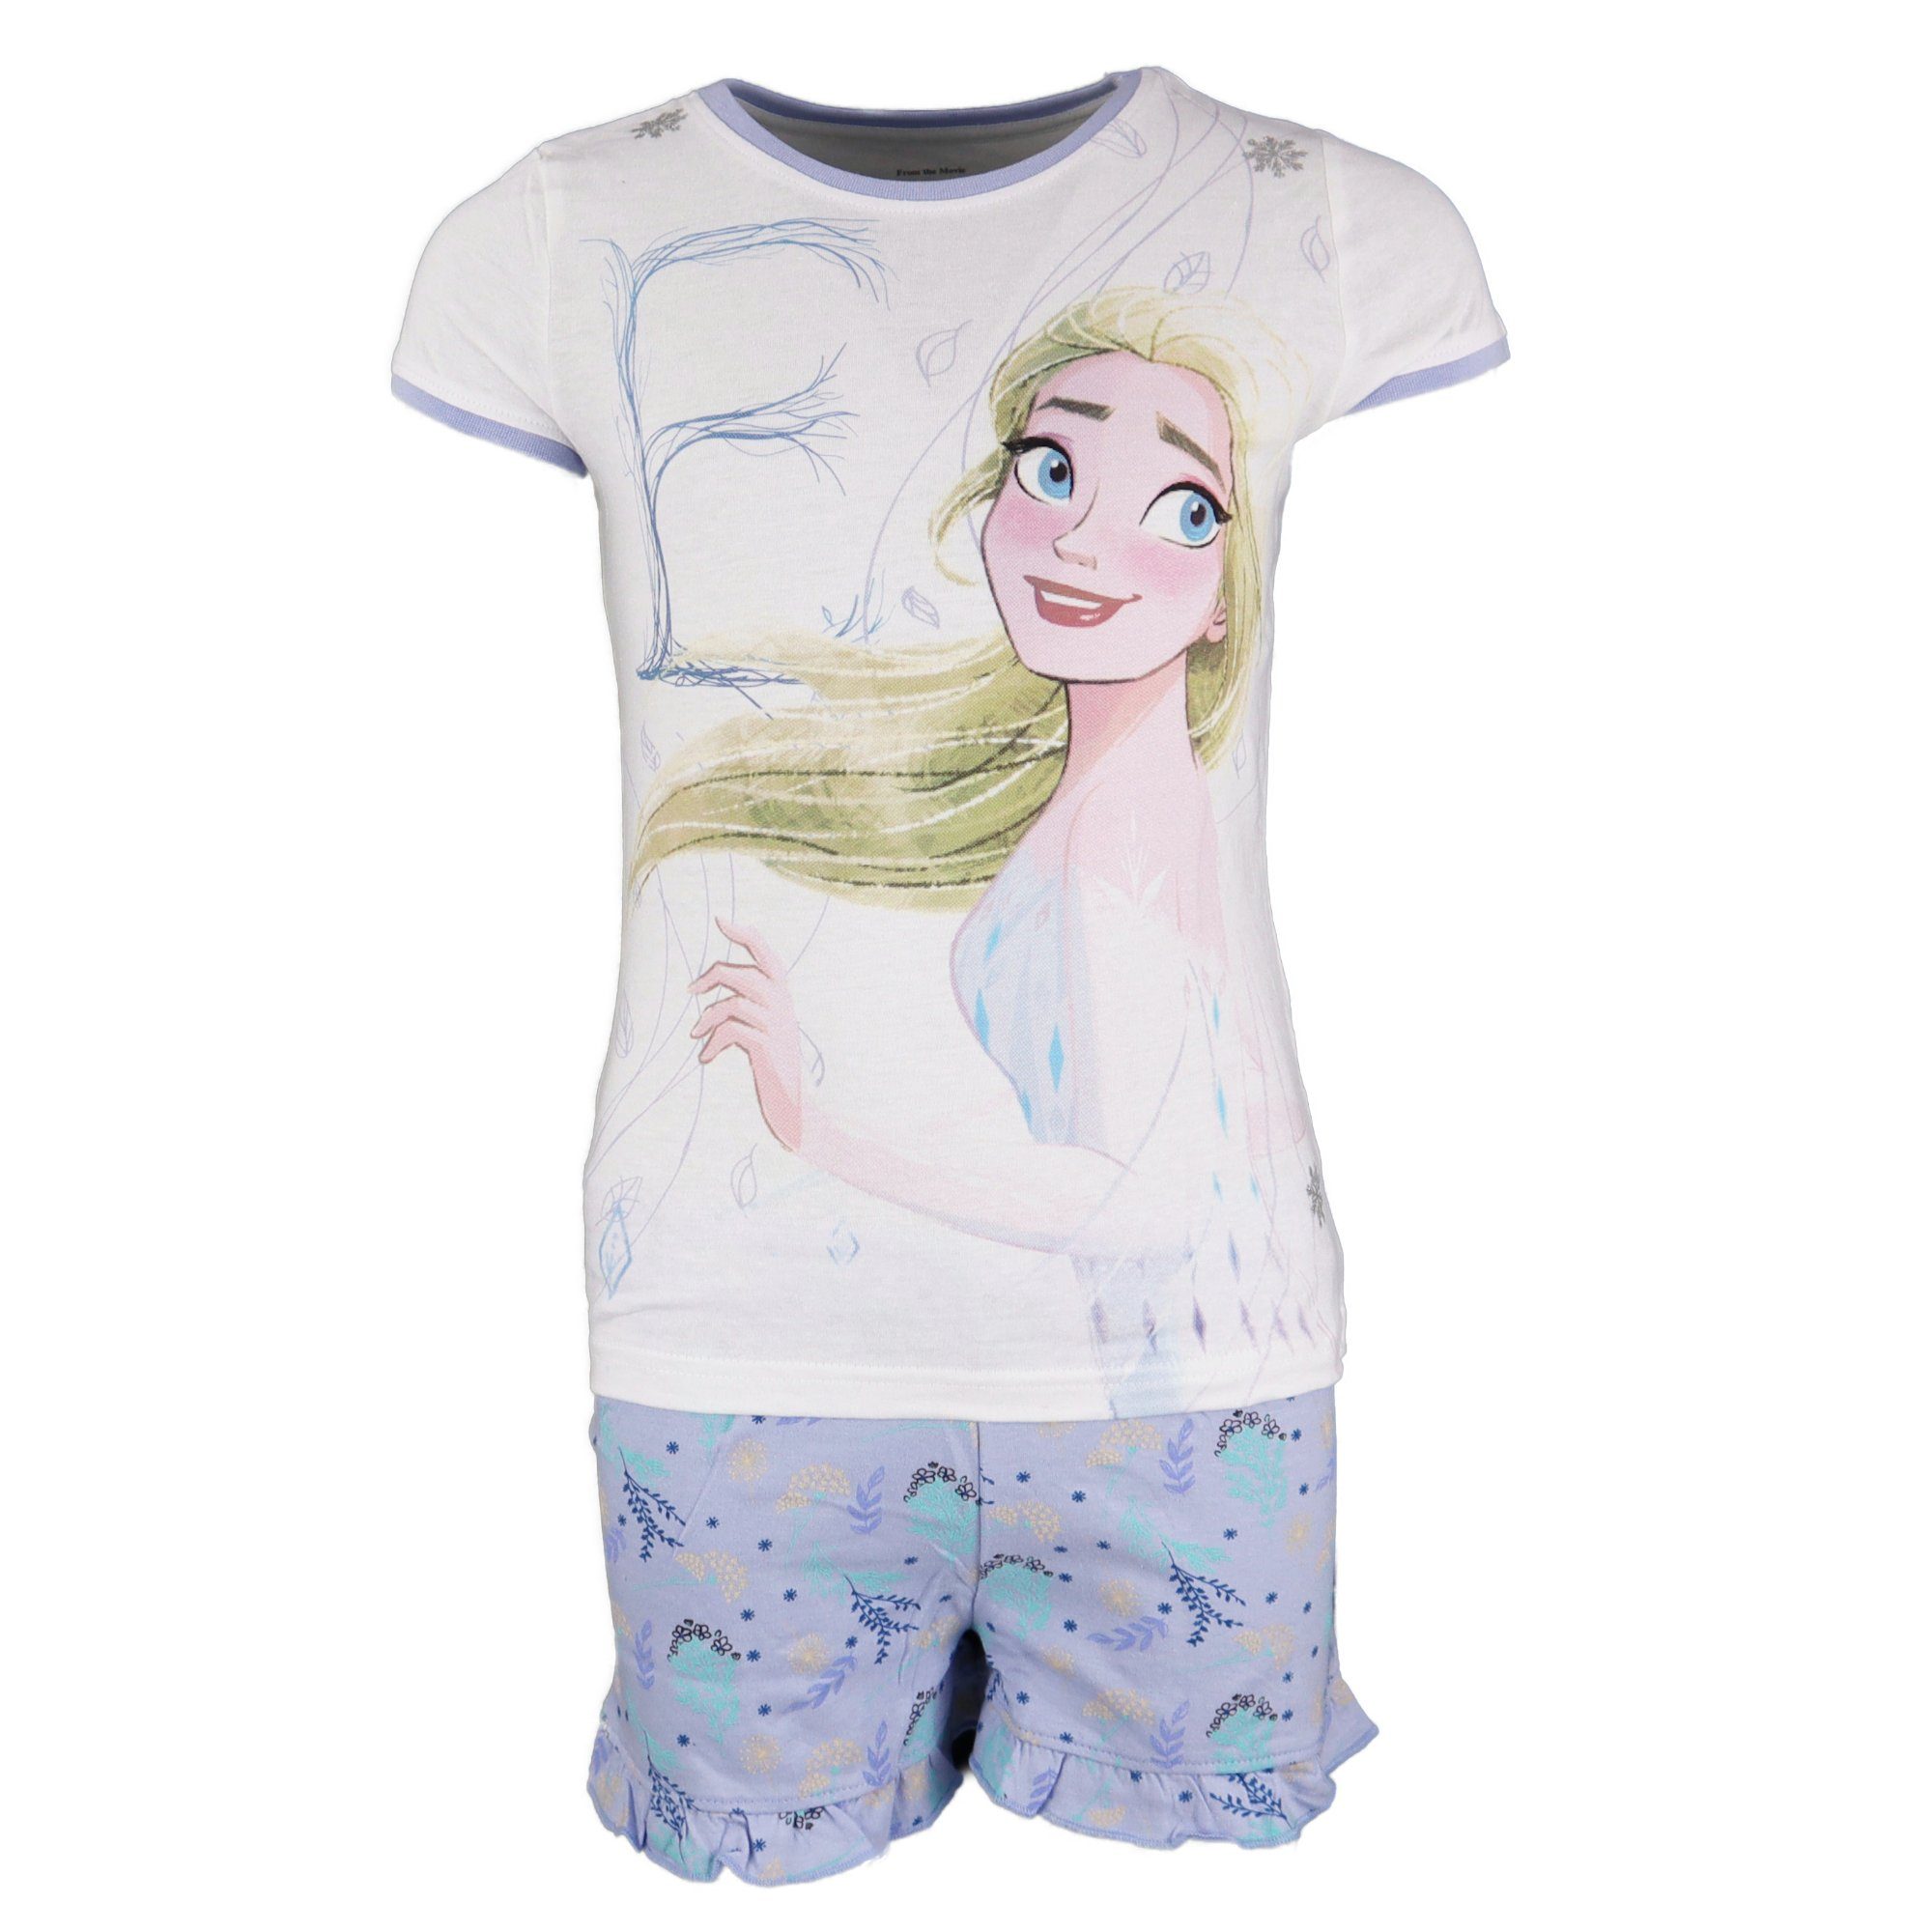 Neu Pyjama Set Schlafanzug Kurz Mädchen Frozen Rosa Blau pink 104 110 116 128#12 